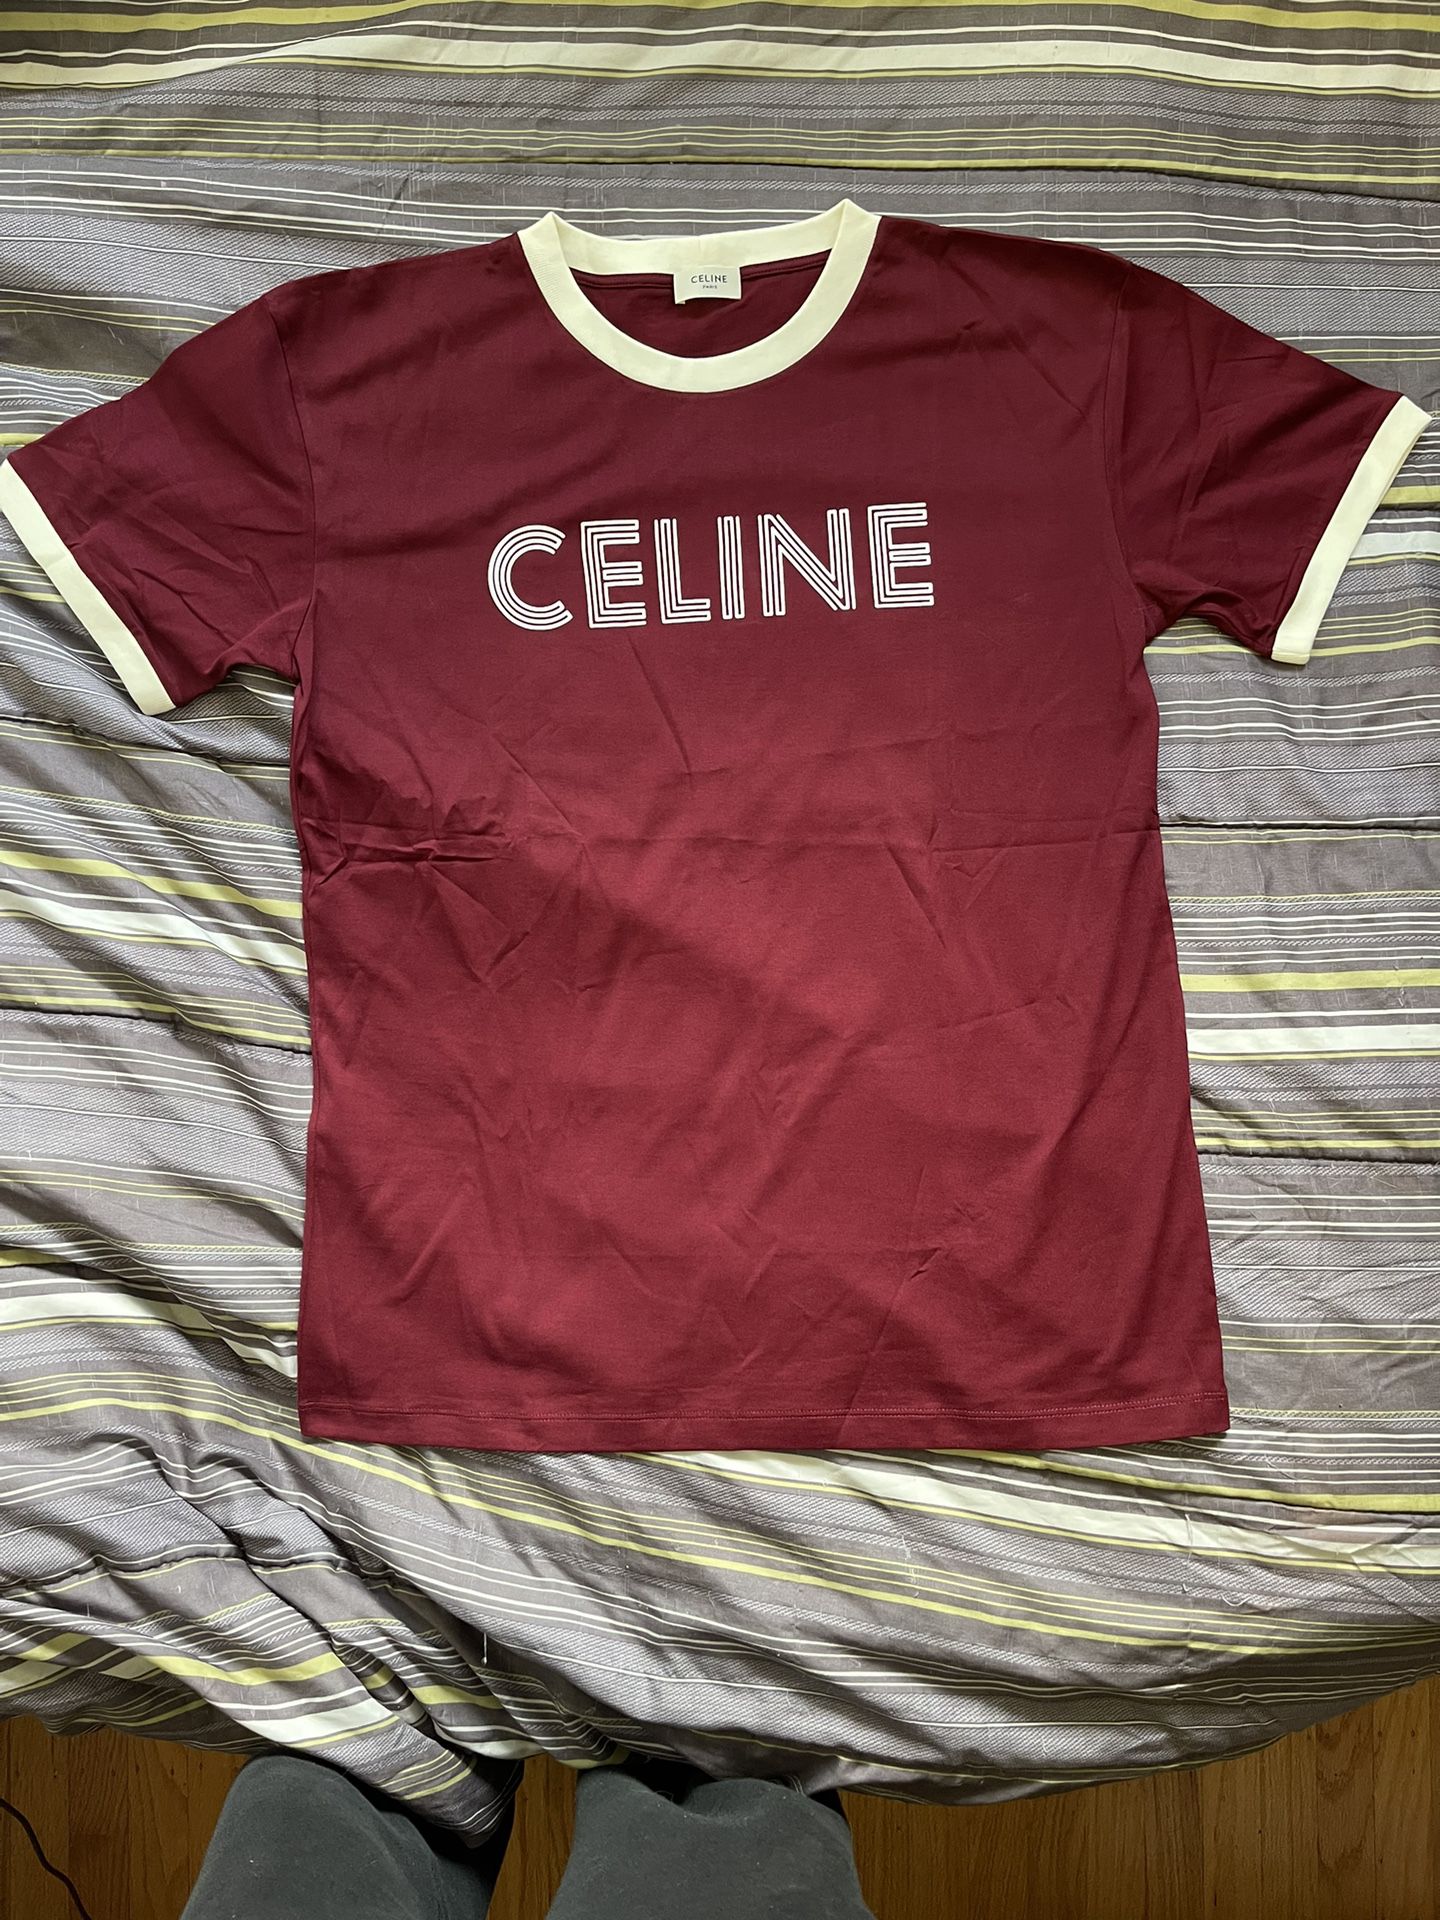 Celine Red Tee Size S